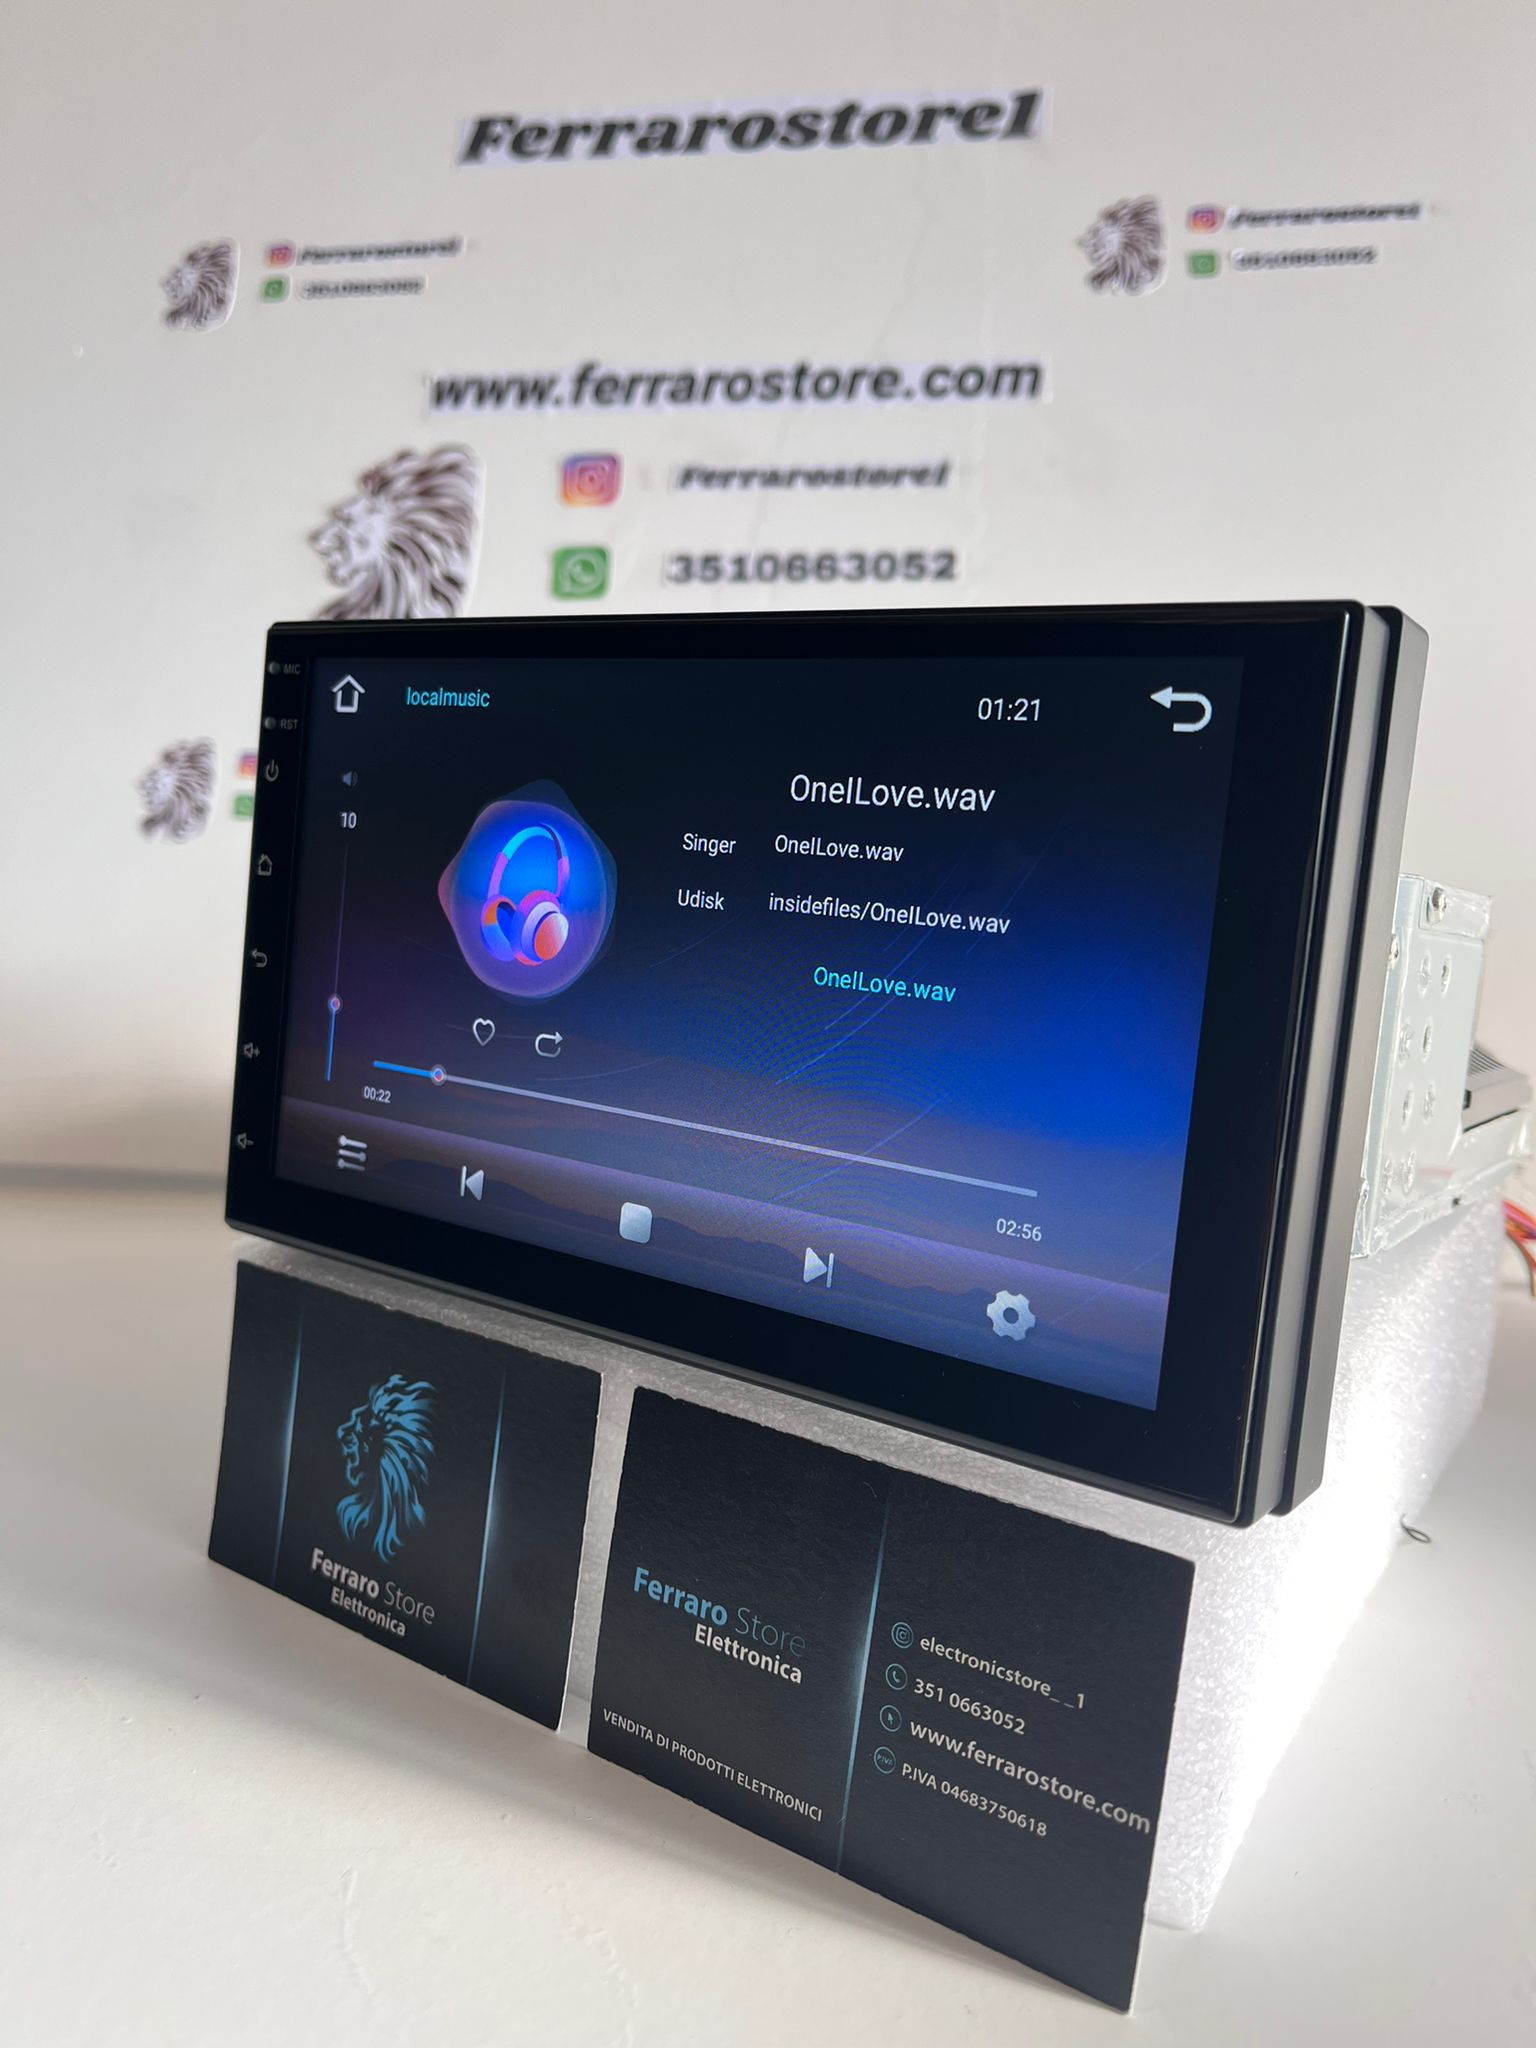 Autoradio Universale [FISSO]- 1Din 7"Pollici, Android, PlayStore, Youtube, Navigatore, Bluetooth, Radio, GPS, Wifi